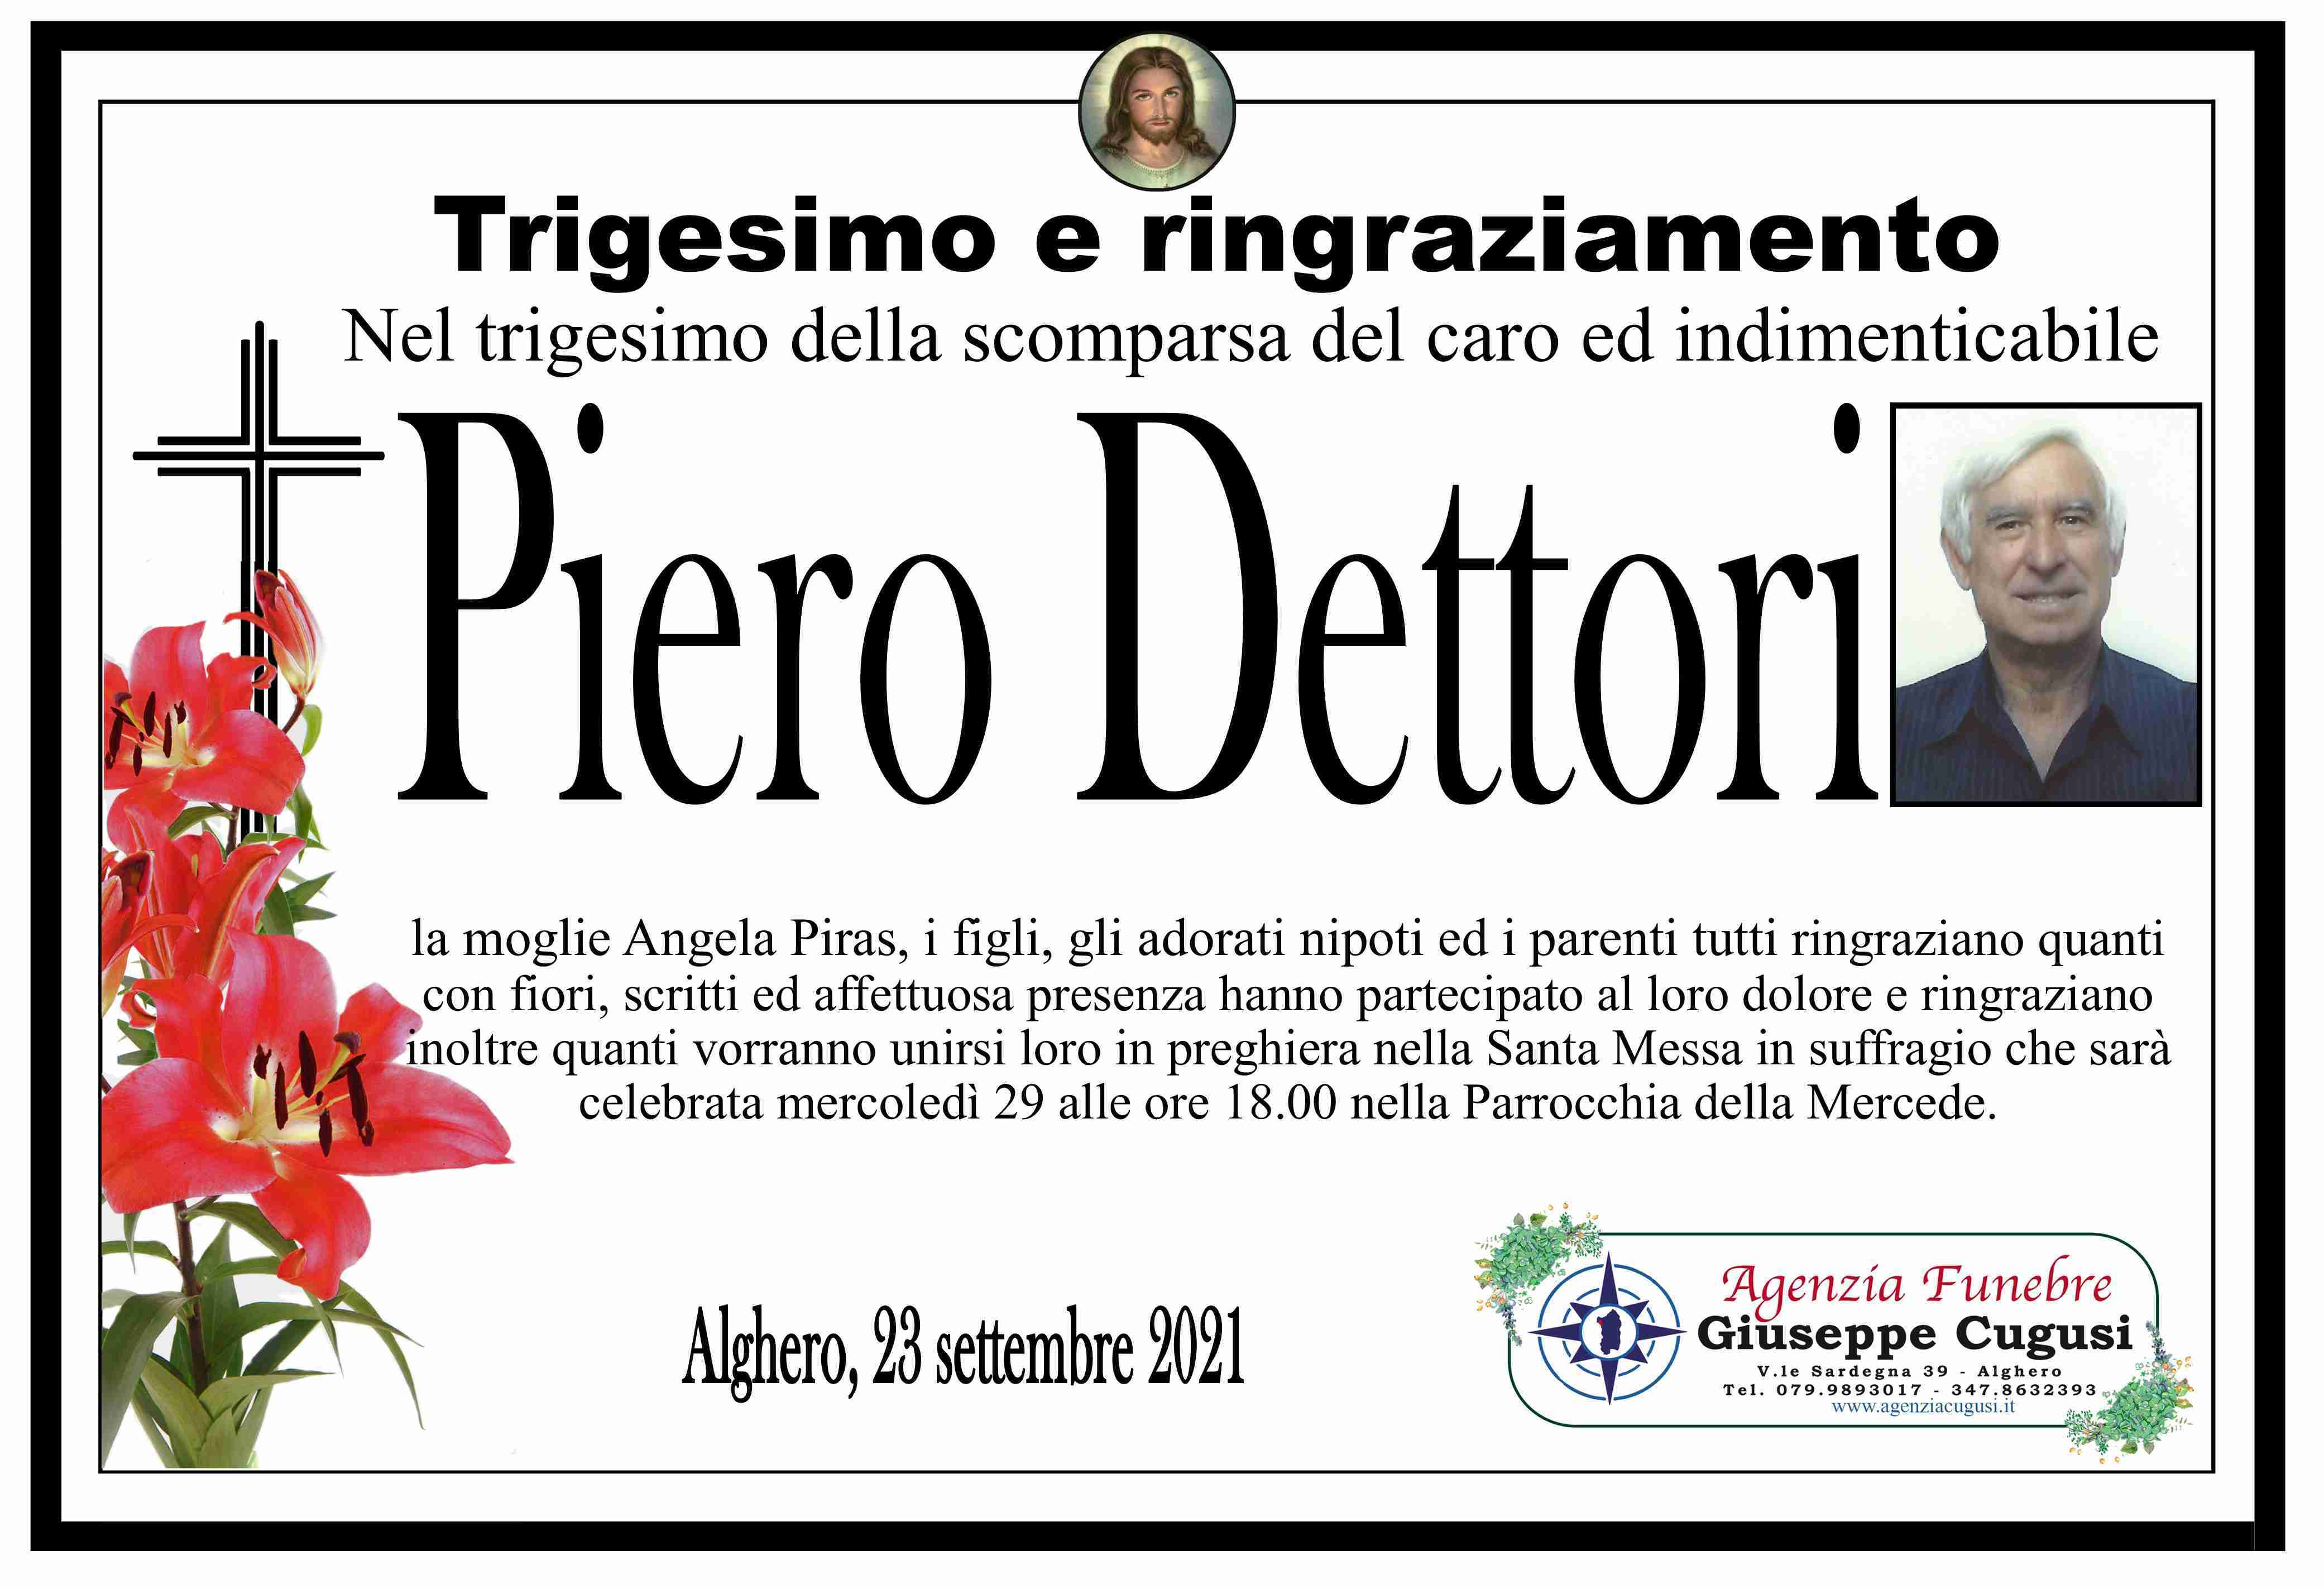 Piero Dettori